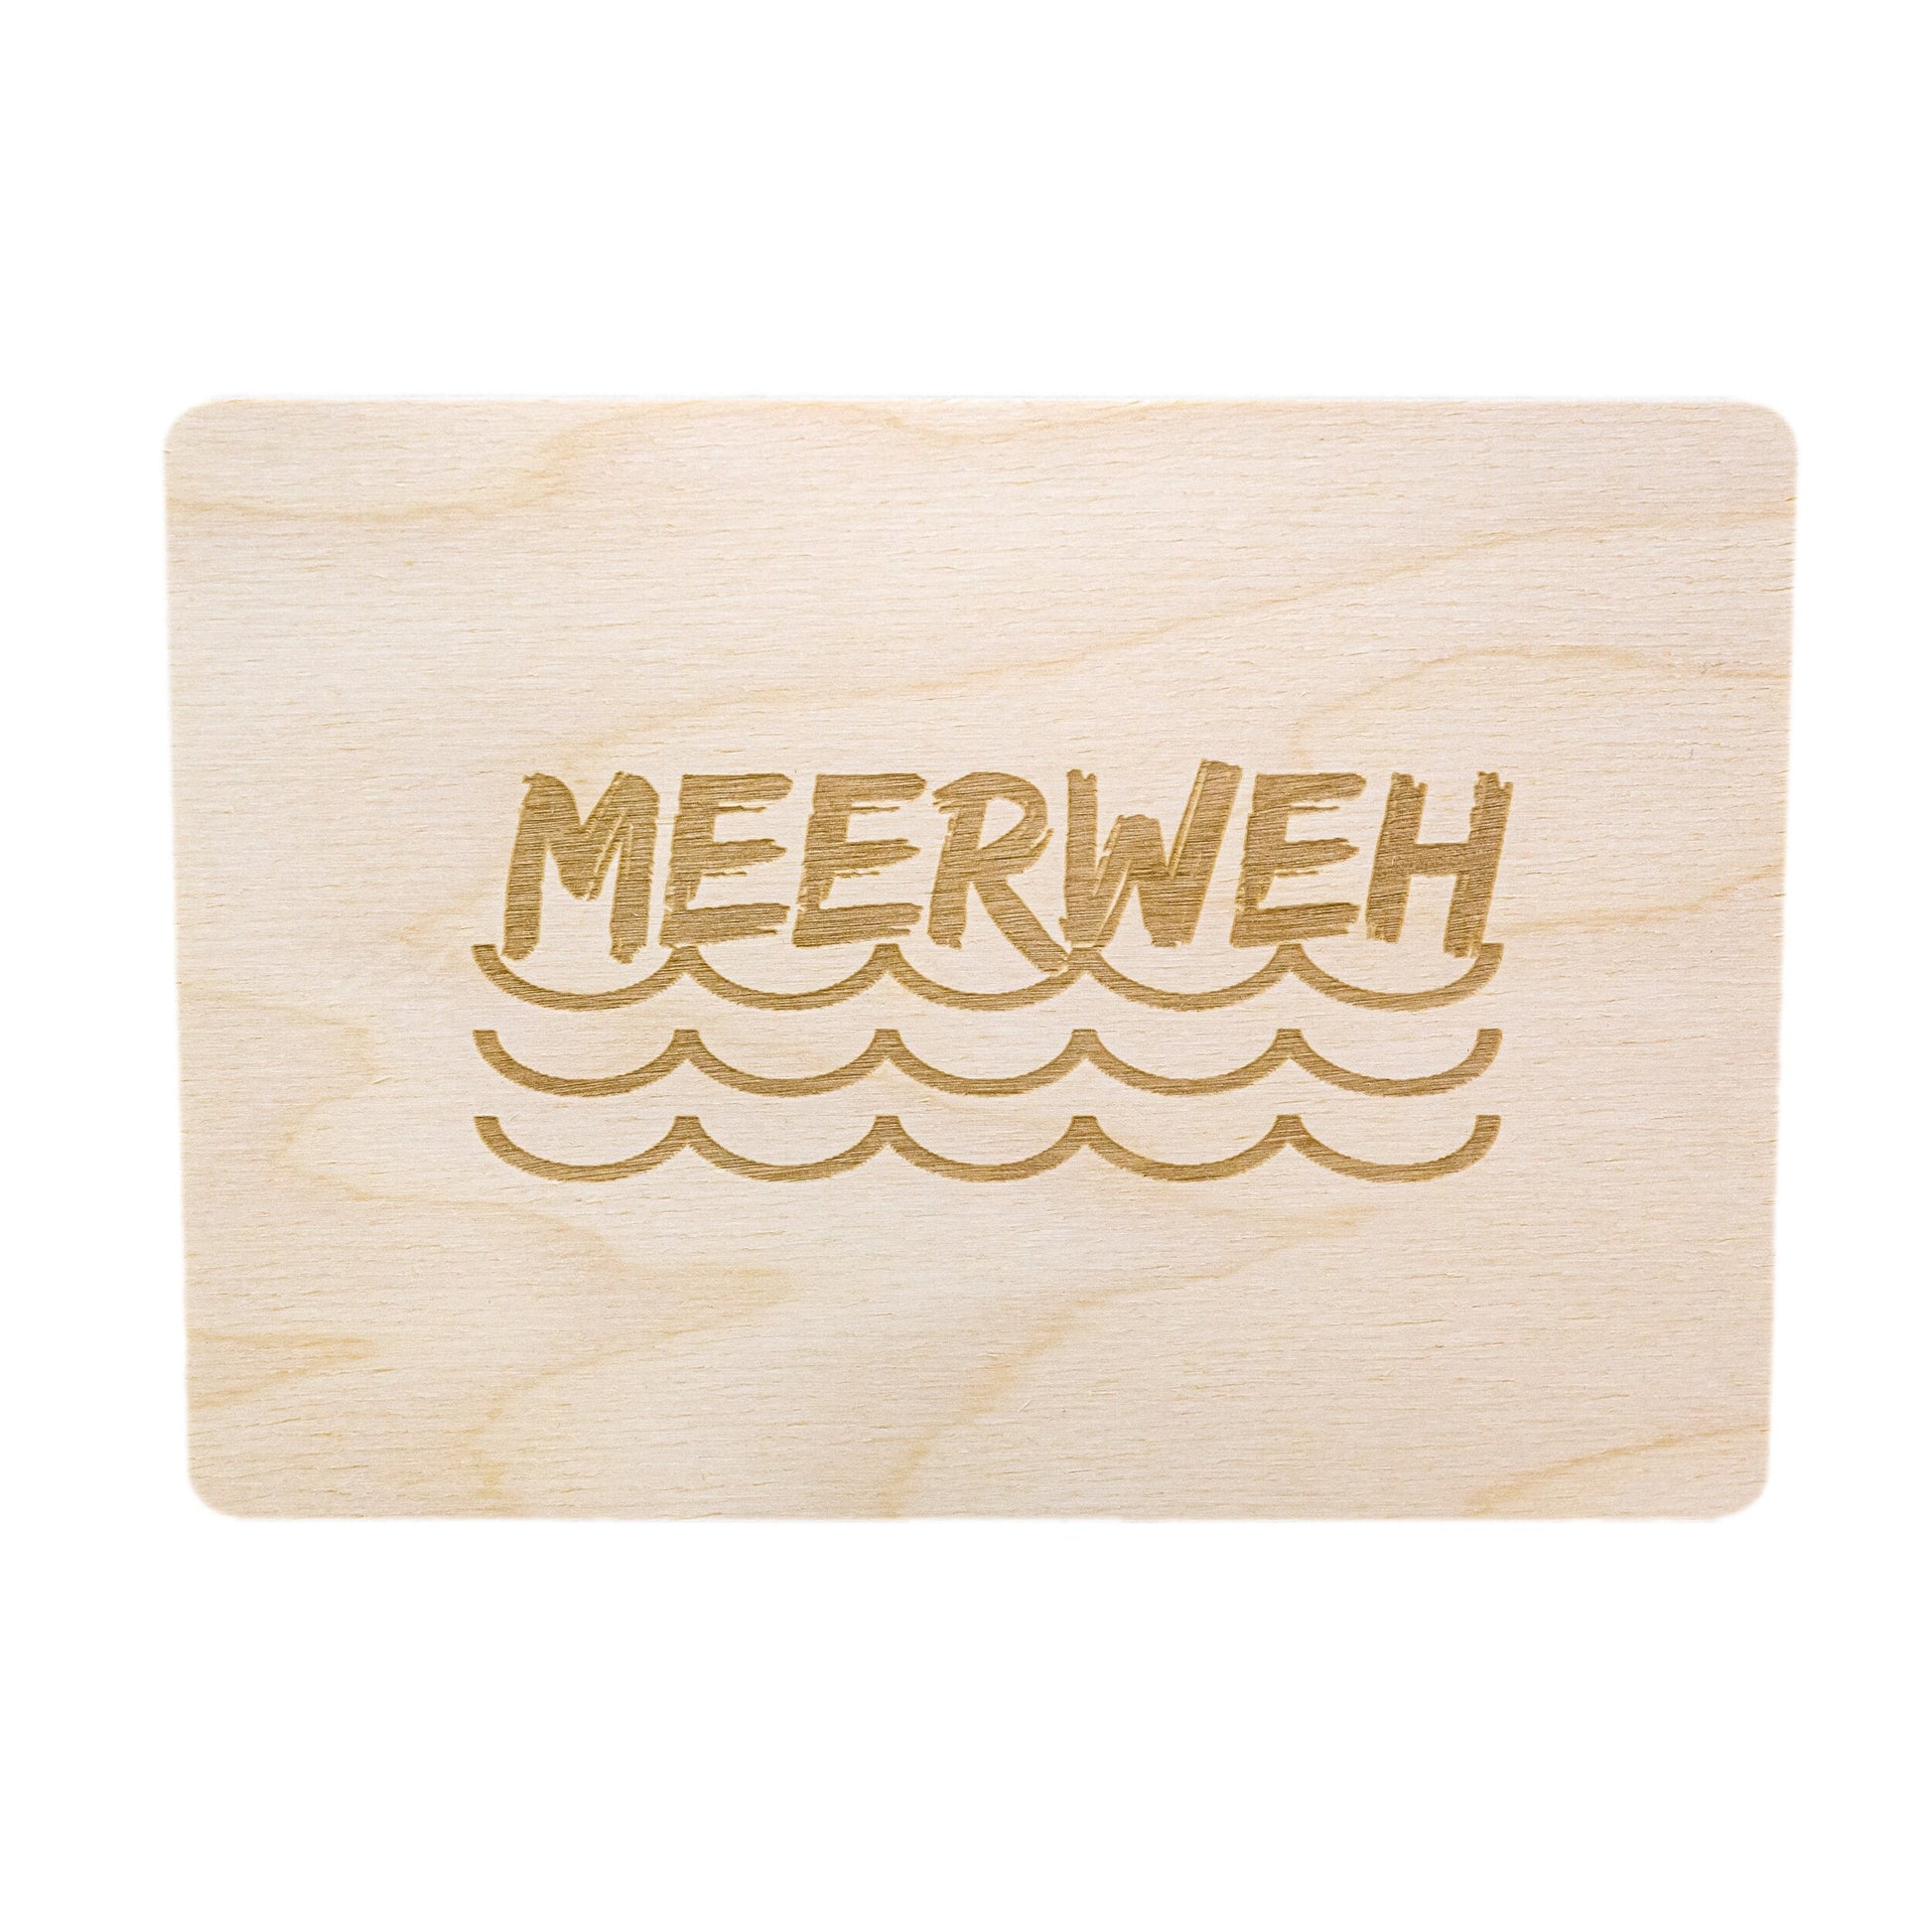 Holzpostkarte • Meerweh • maritim • Holzkarte • Postkarte mit maritimem Motiv - Lasergravur